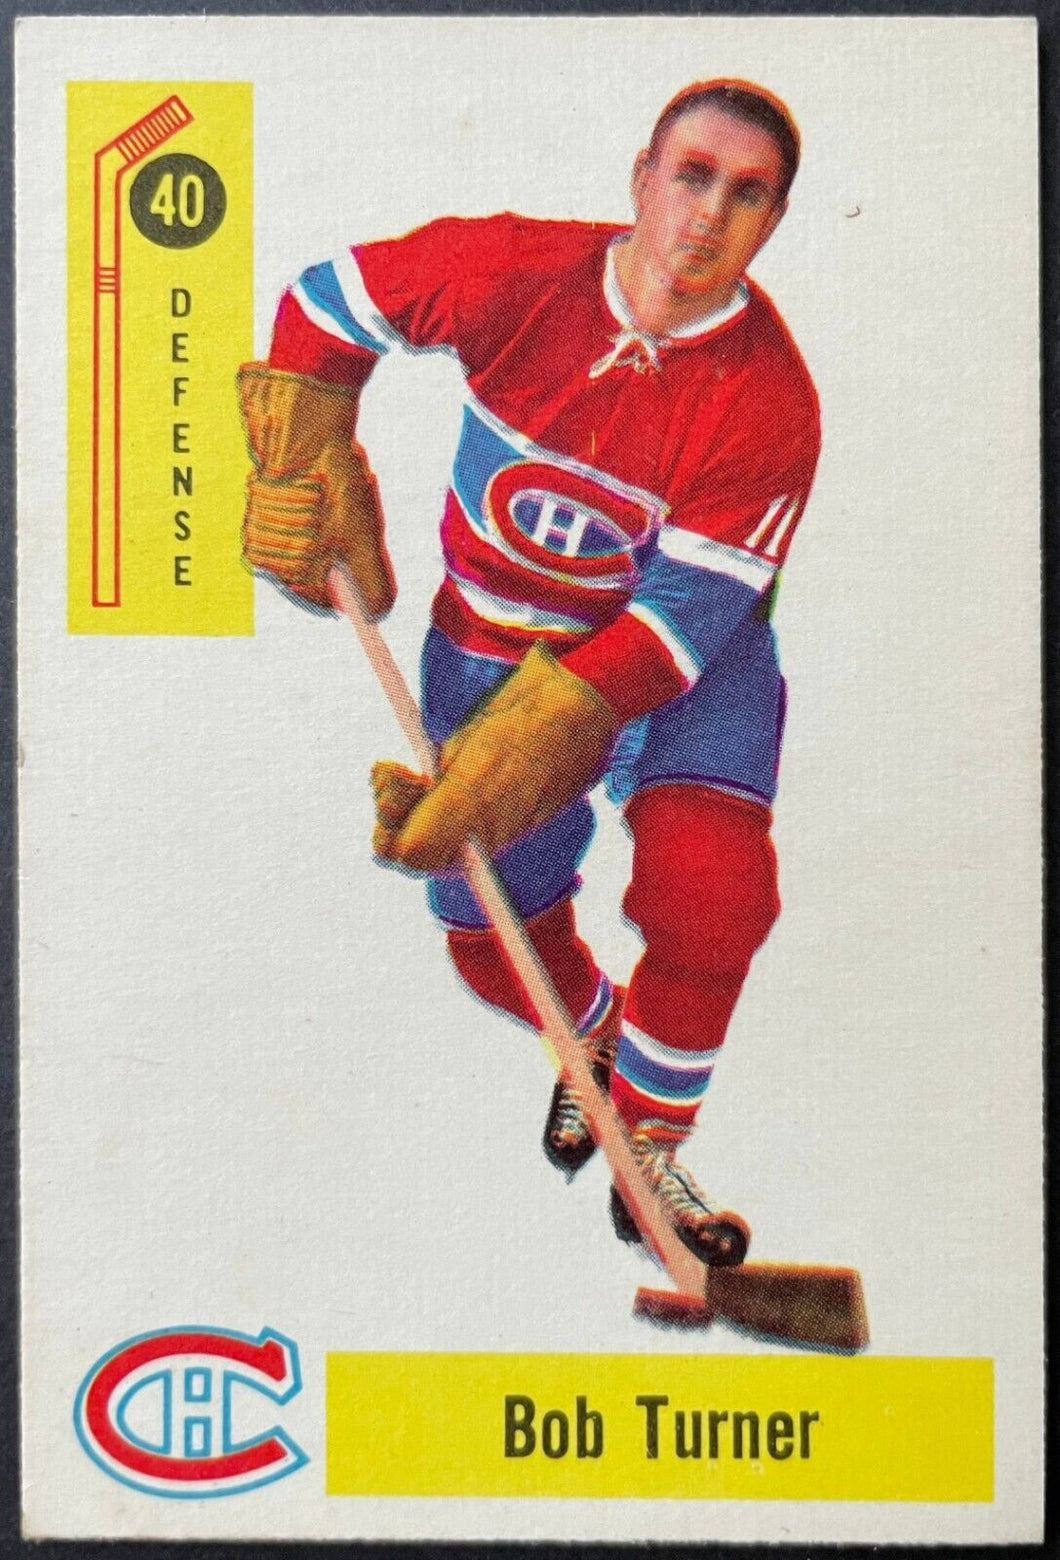 1958-59 Parkhurst Hockey Card #40 Bob Turner Montreal Canadiens NHL Vintage